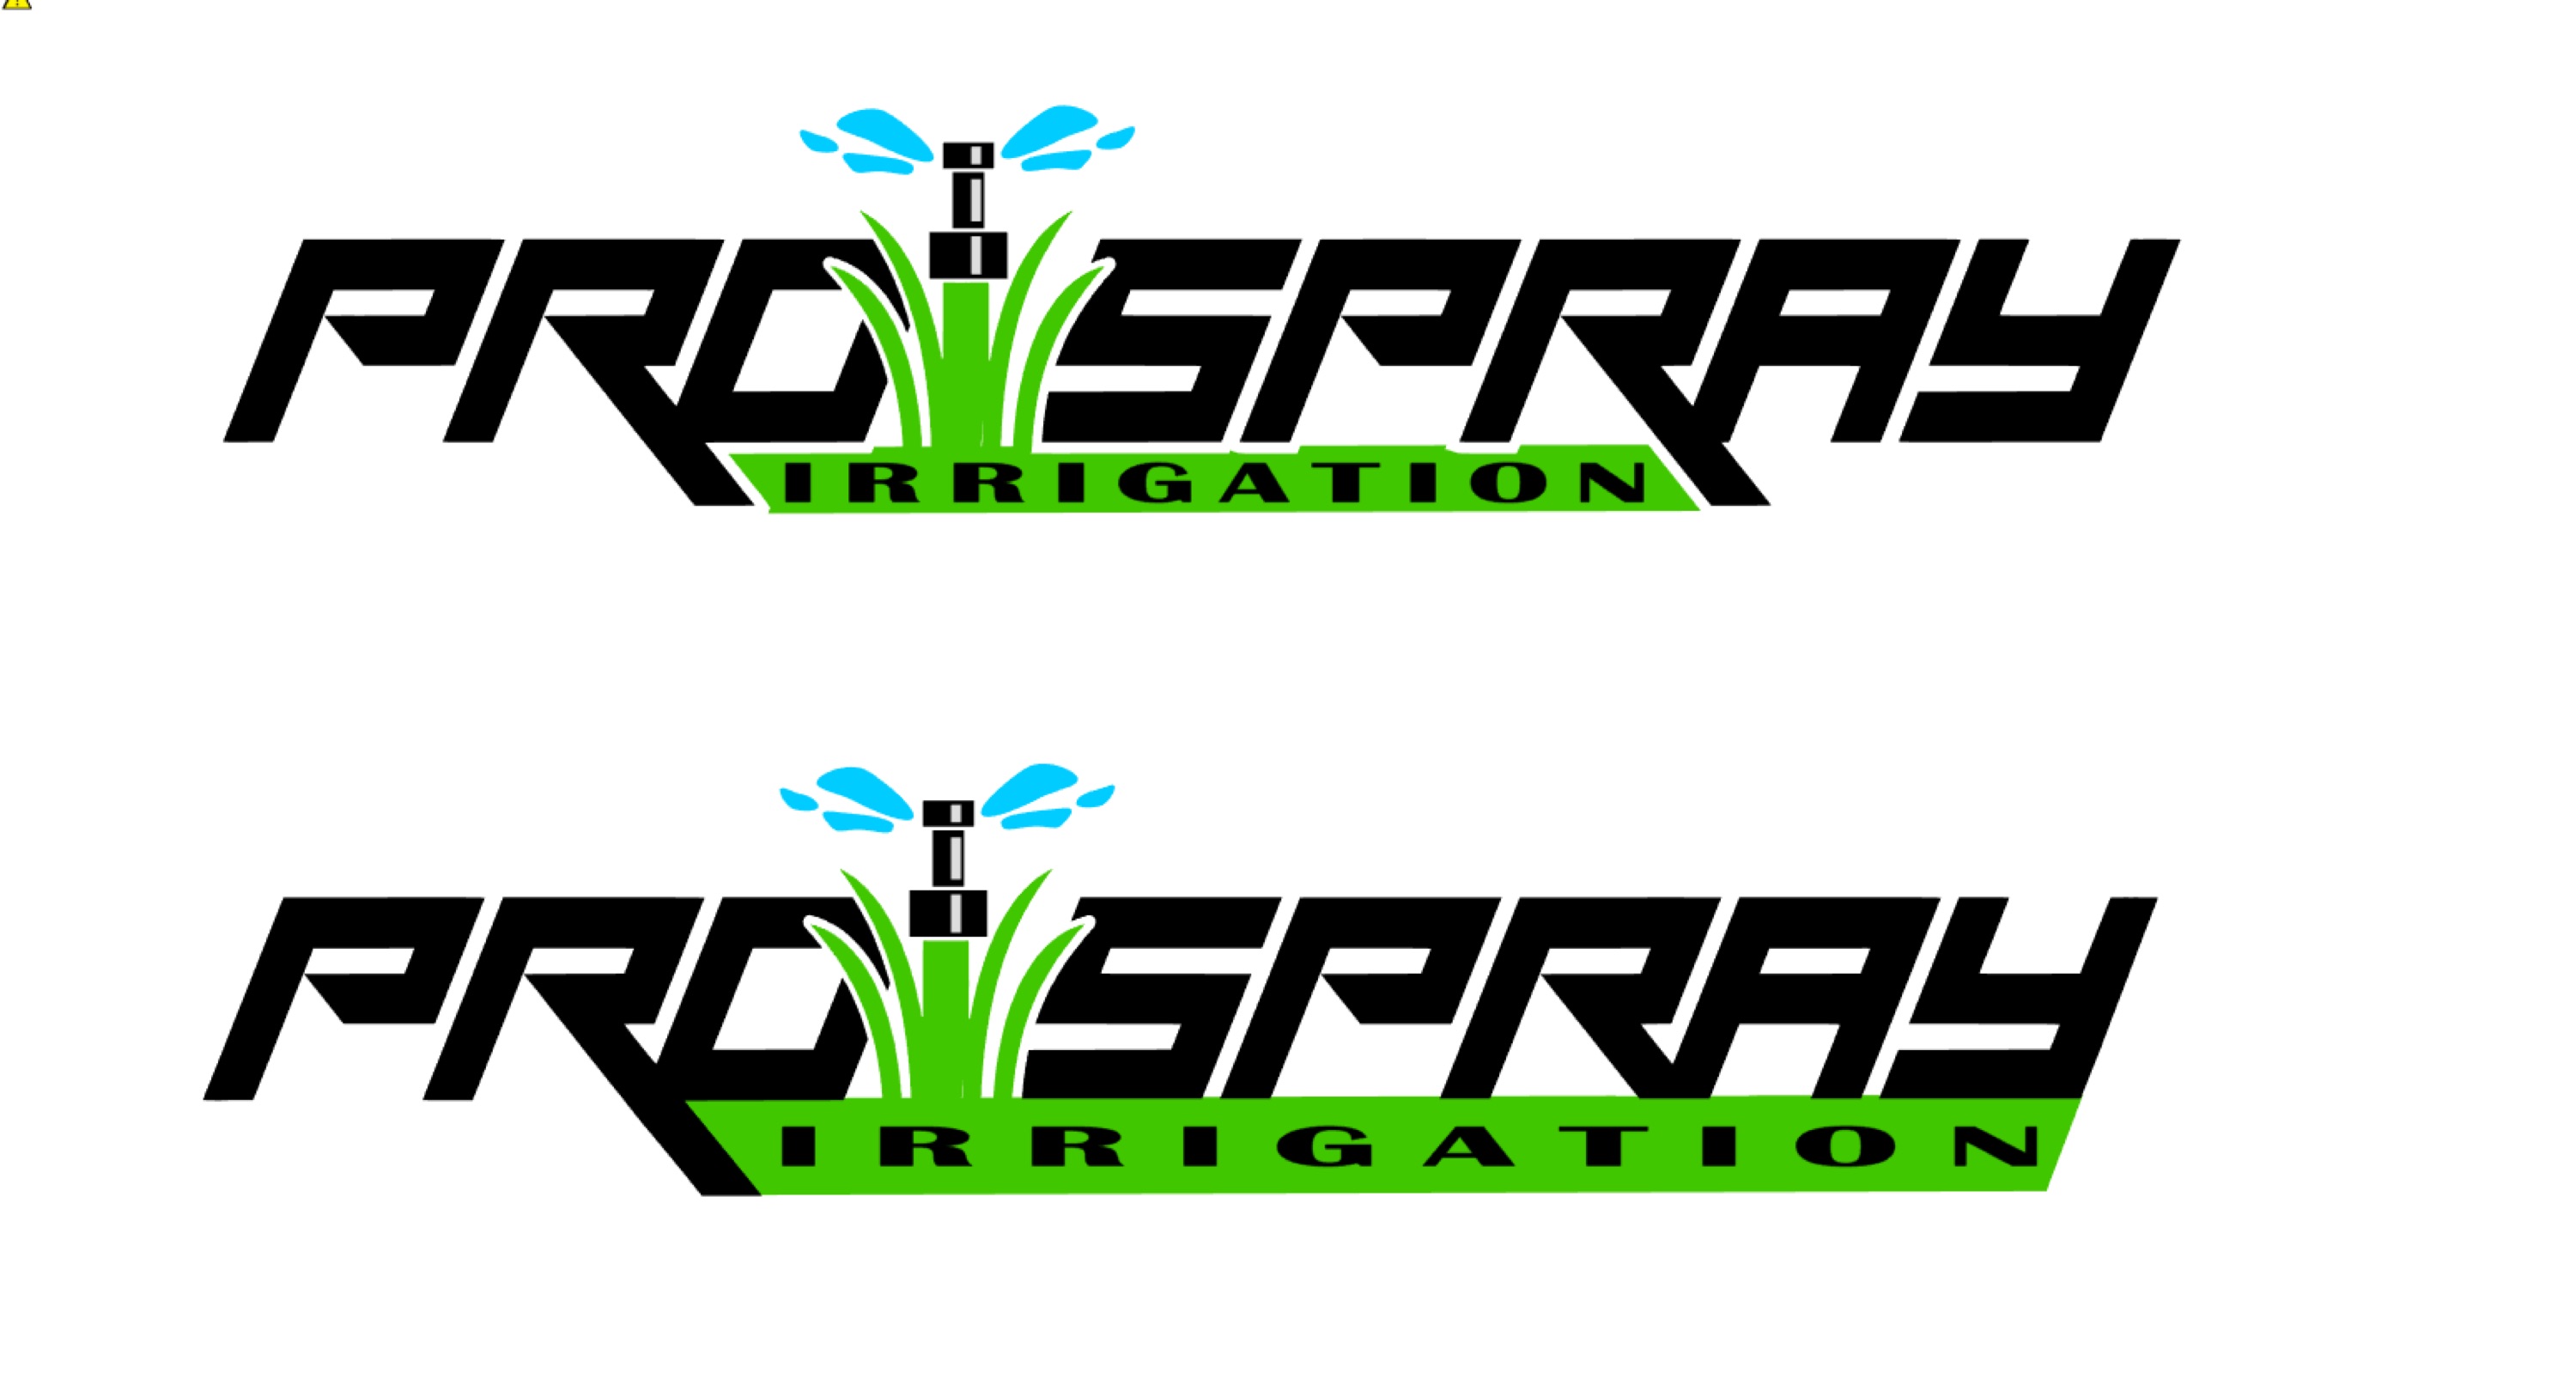 Pro Spray Irrigation Logo